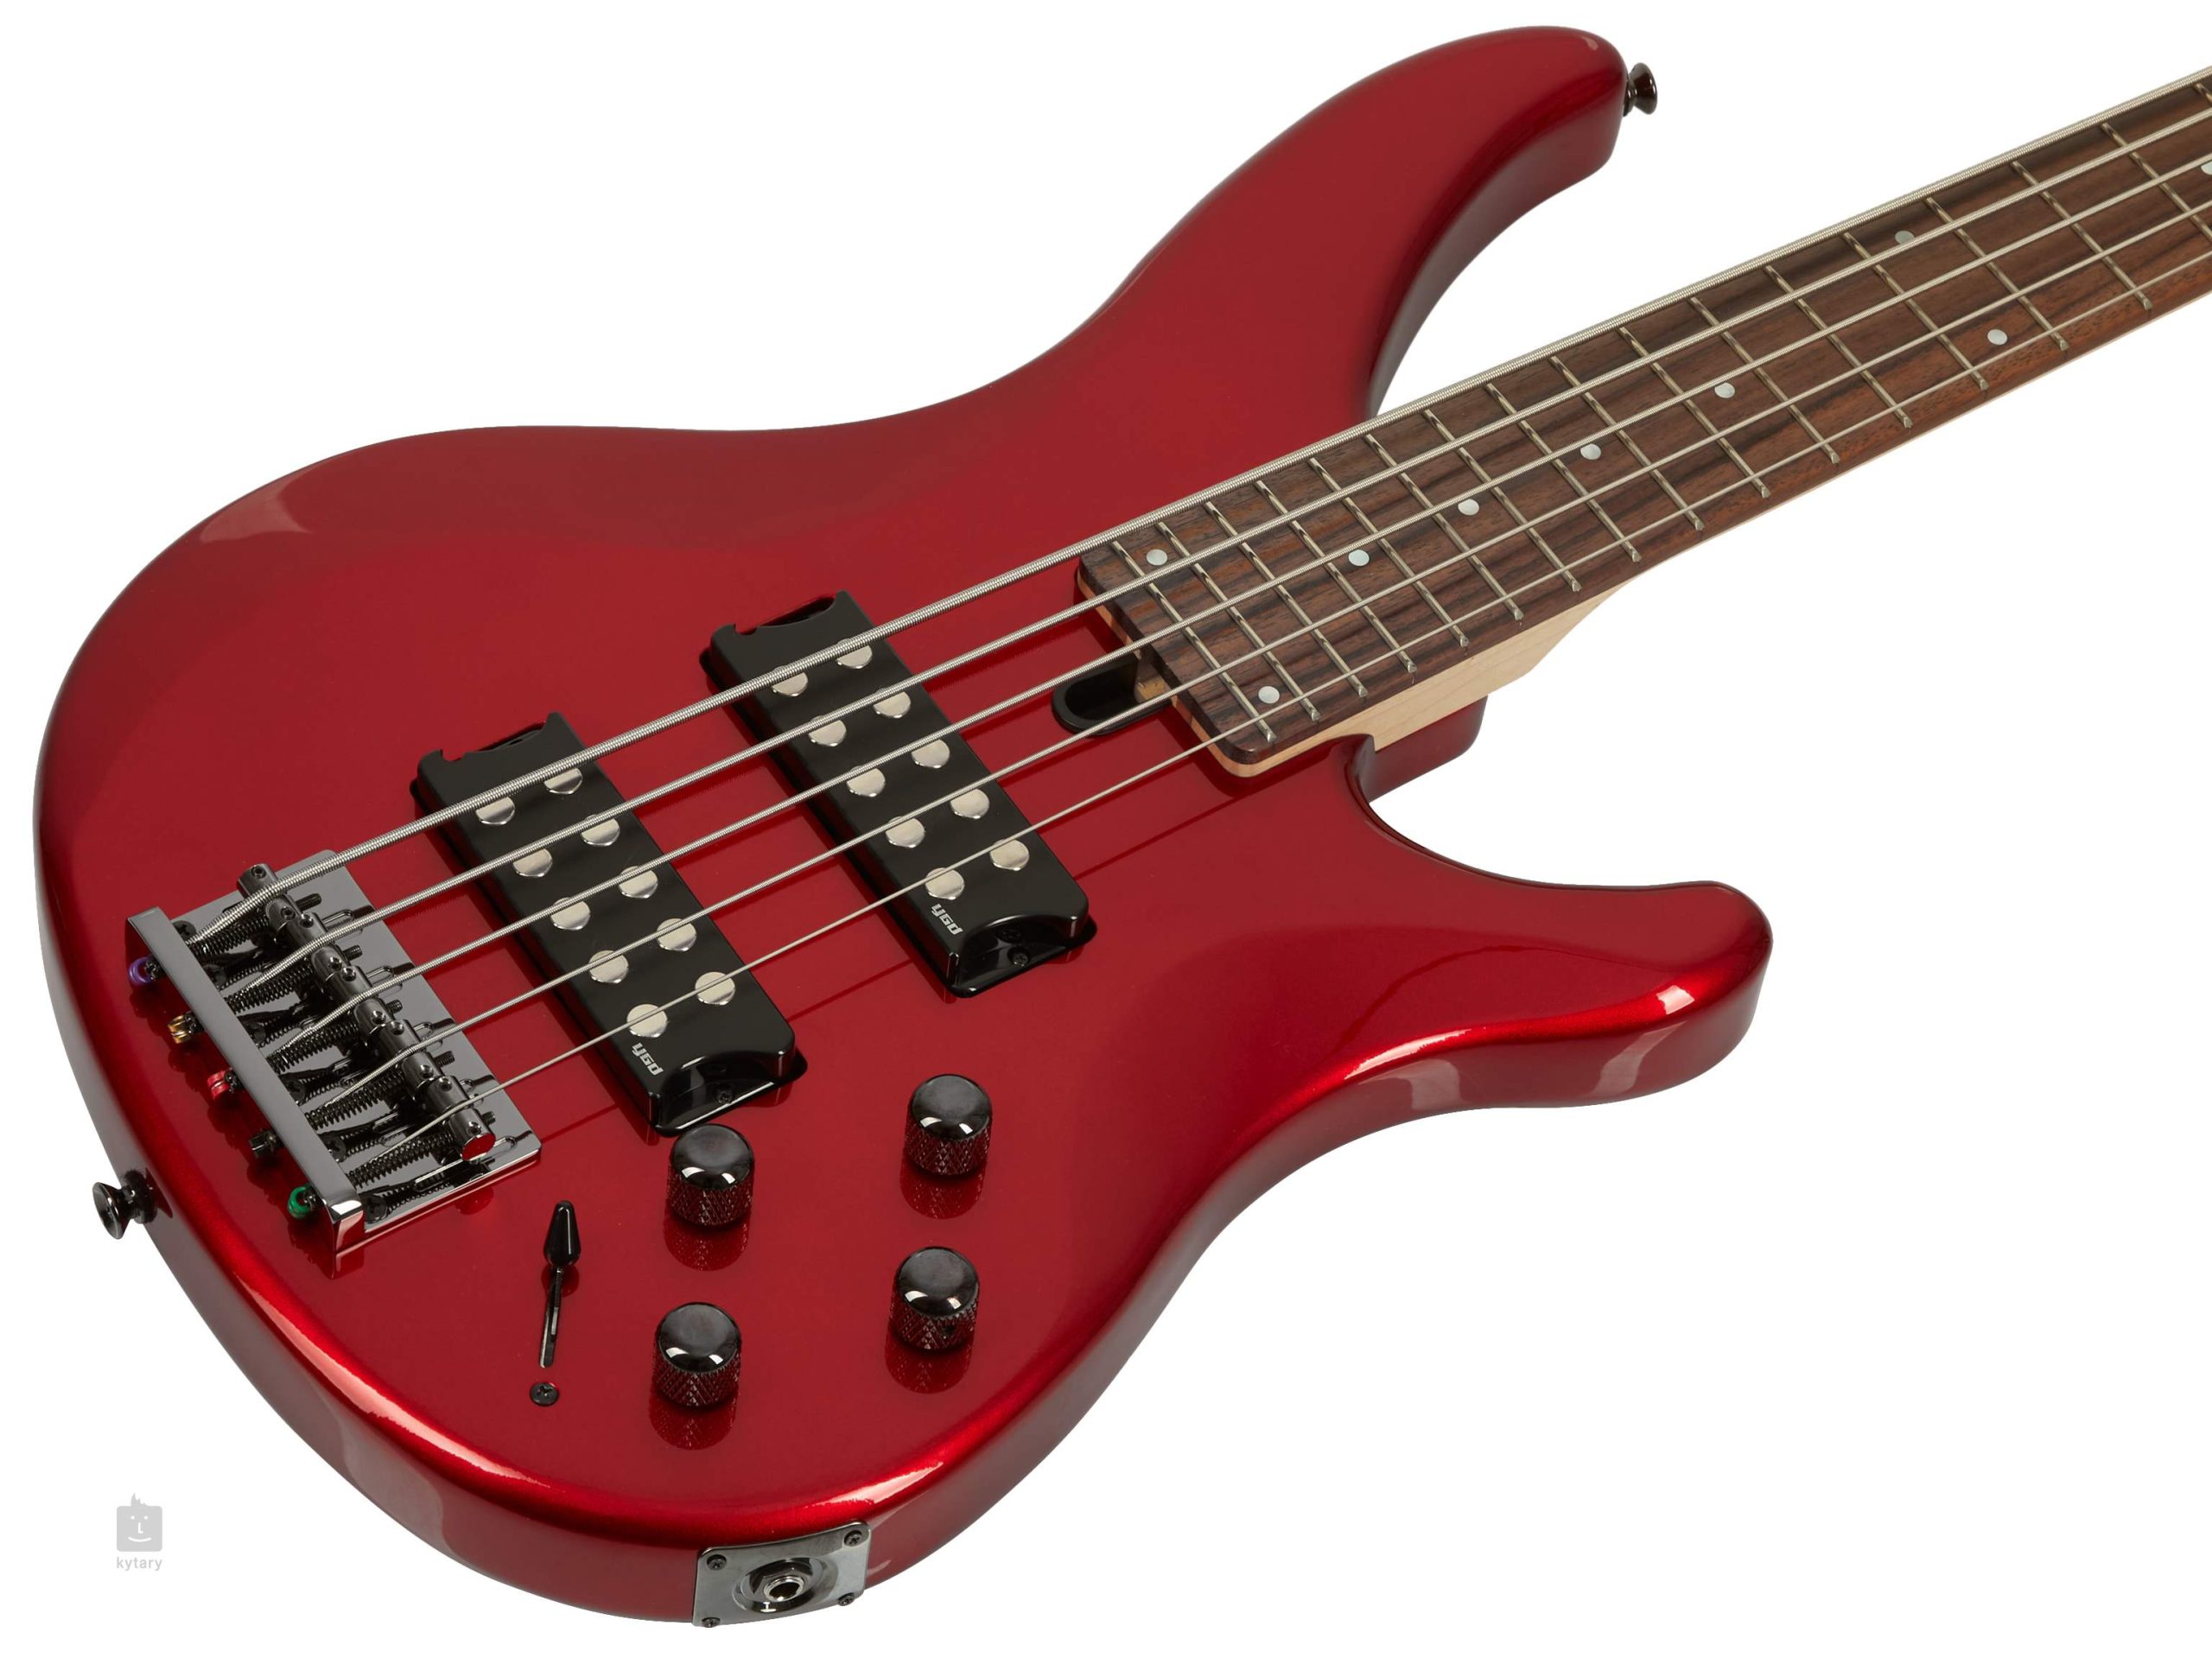 Yamaha TRBX305 Electric 5-String Bass Guitar